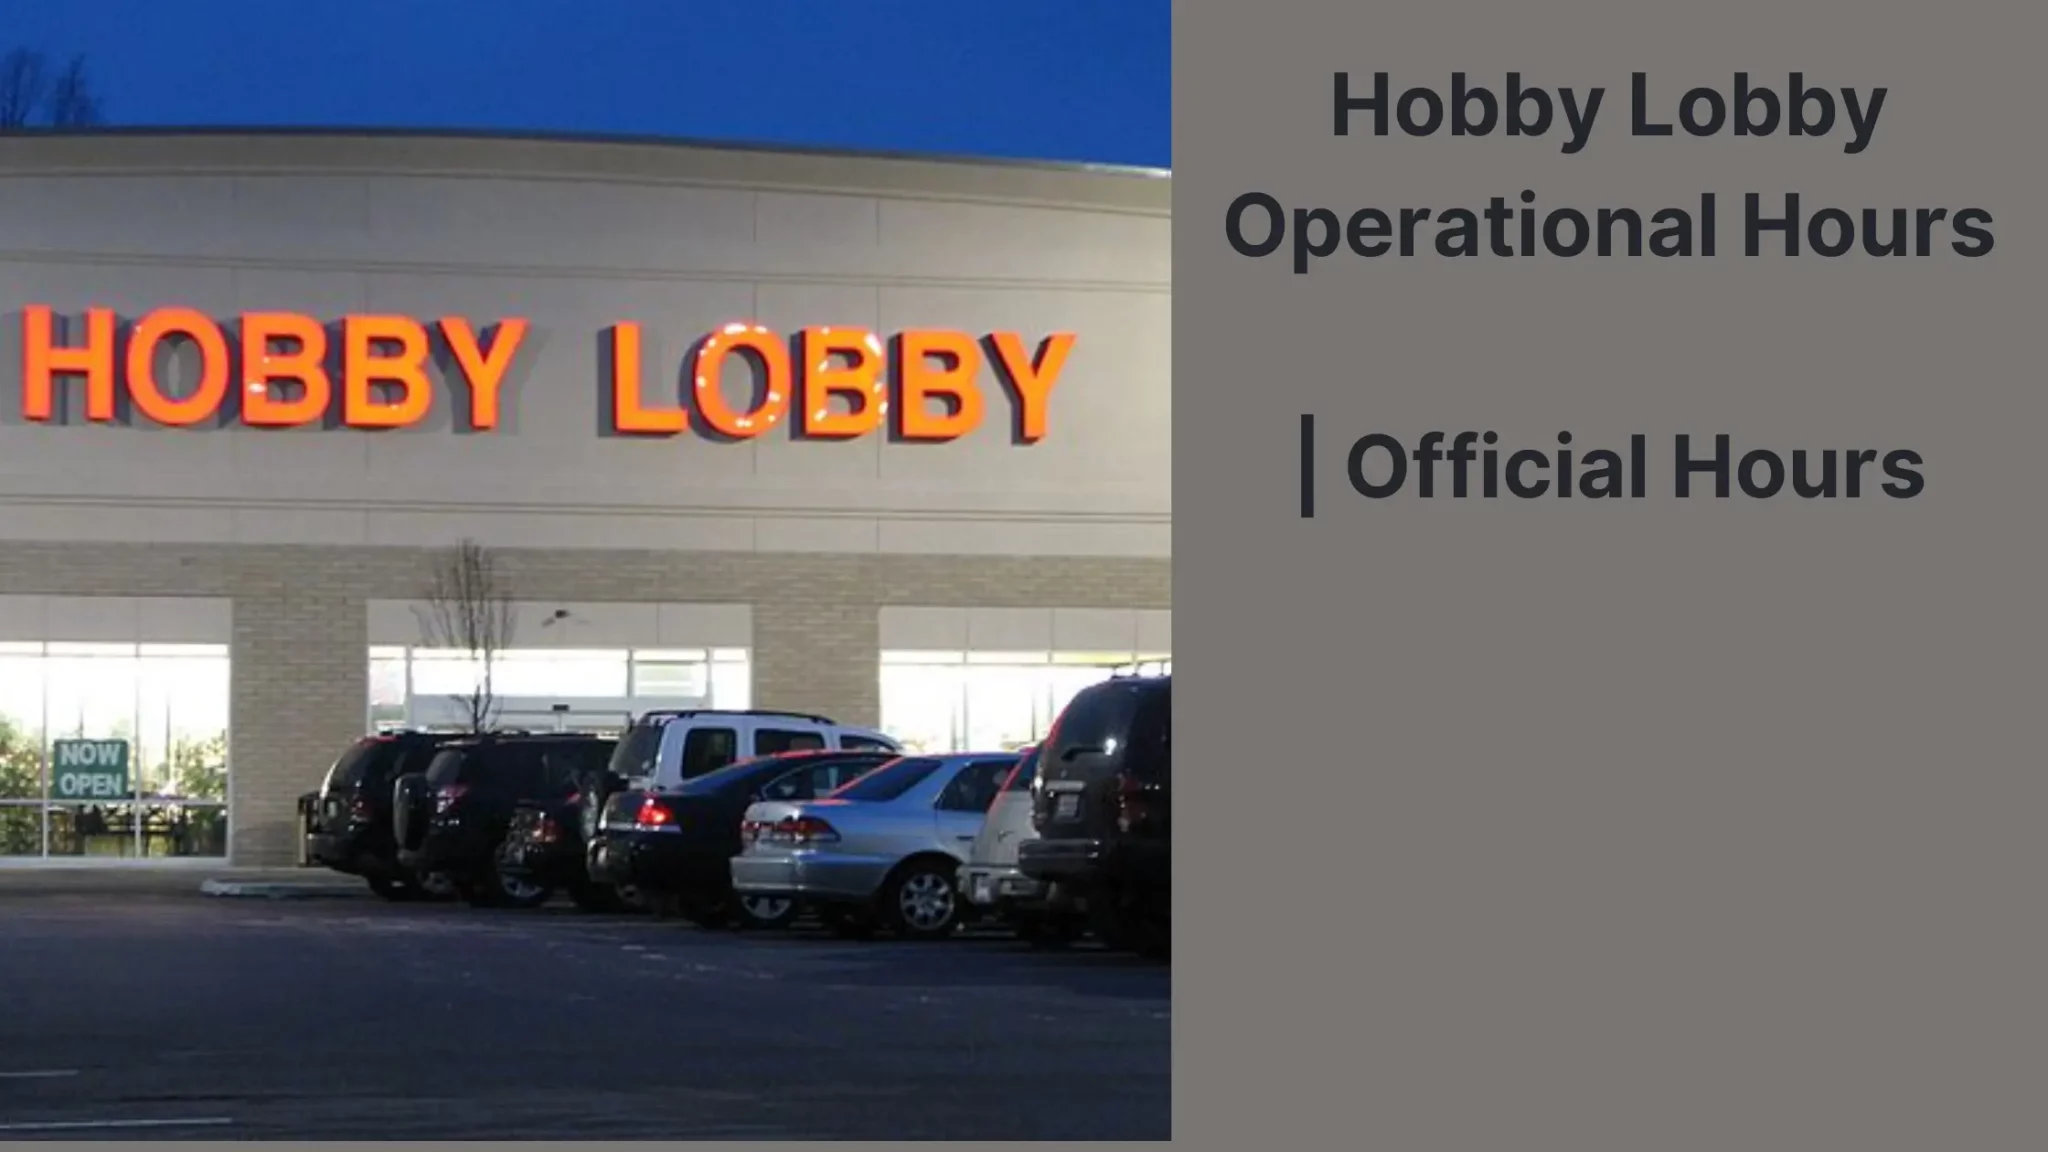 Hobby Lobby Operational Hours